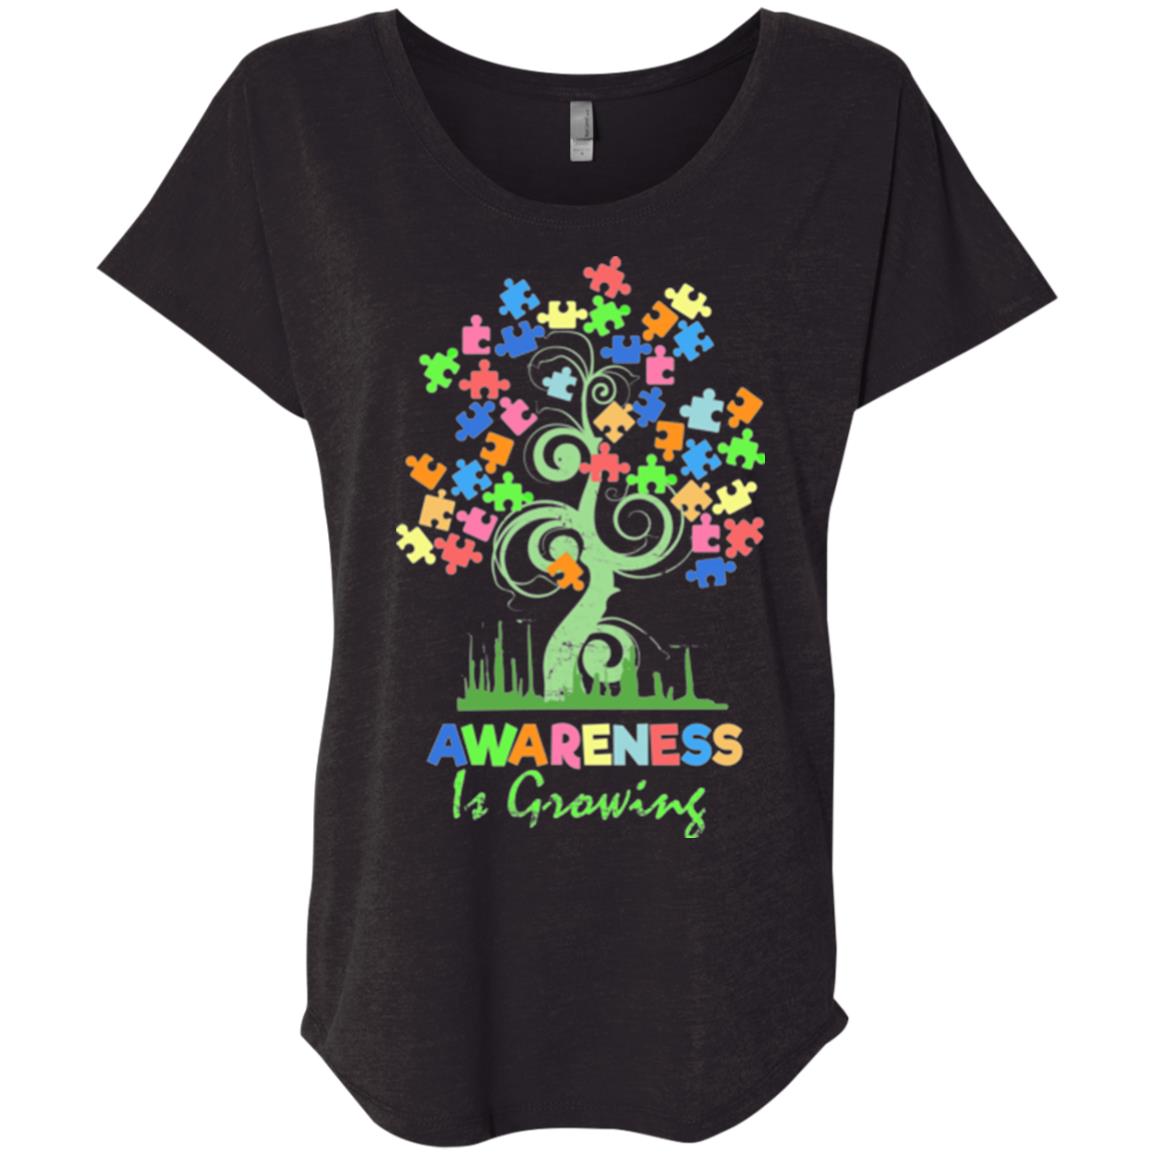 Autism Awareness Shirt For Women - Awareness Is Growing - GoneBold.gift